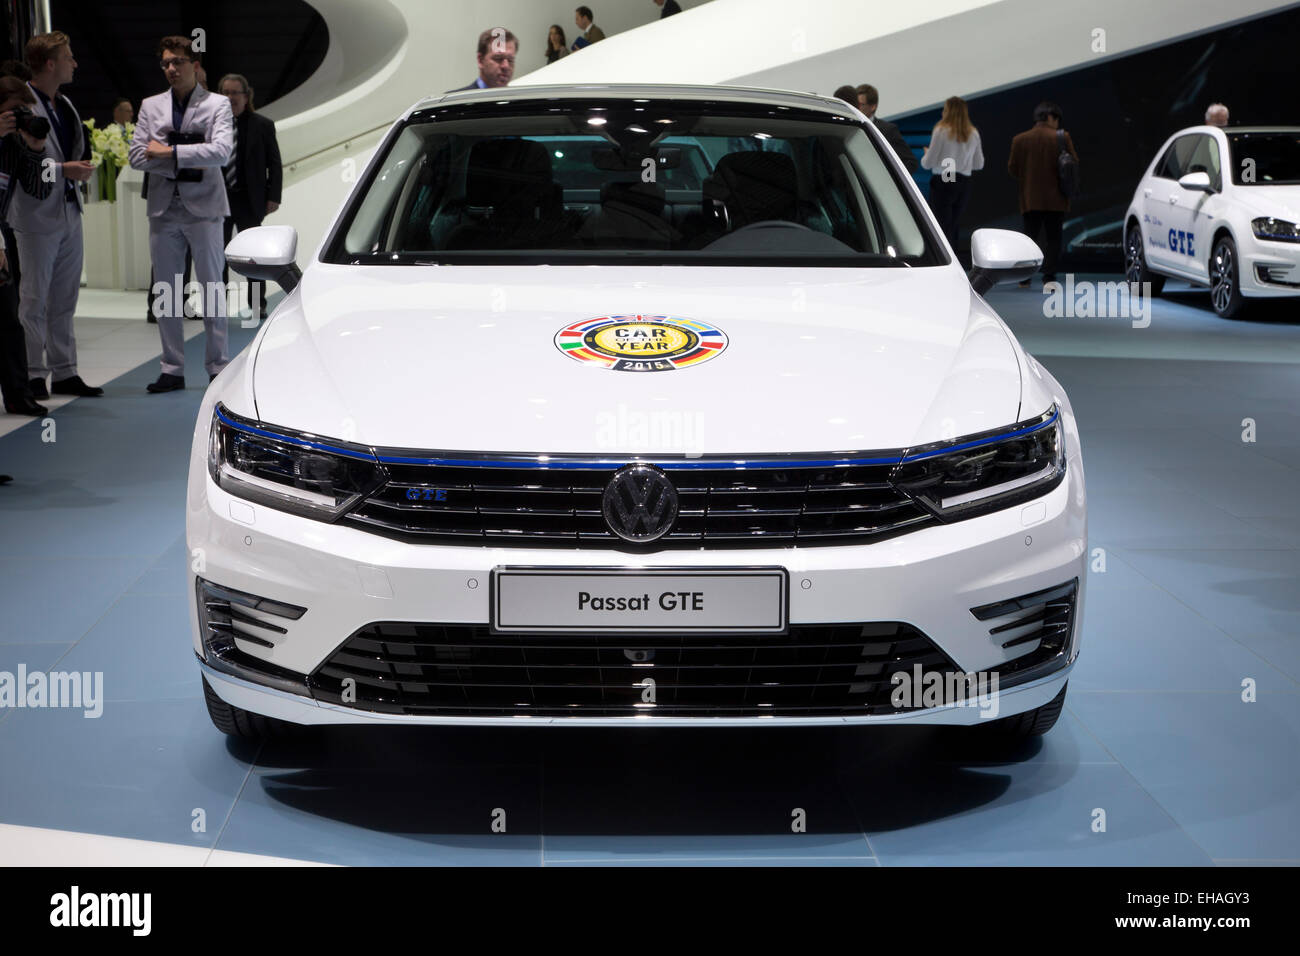 Volkswagen VW Passat, Car of the Year at the Geneva motor show 2015 Stock Photo